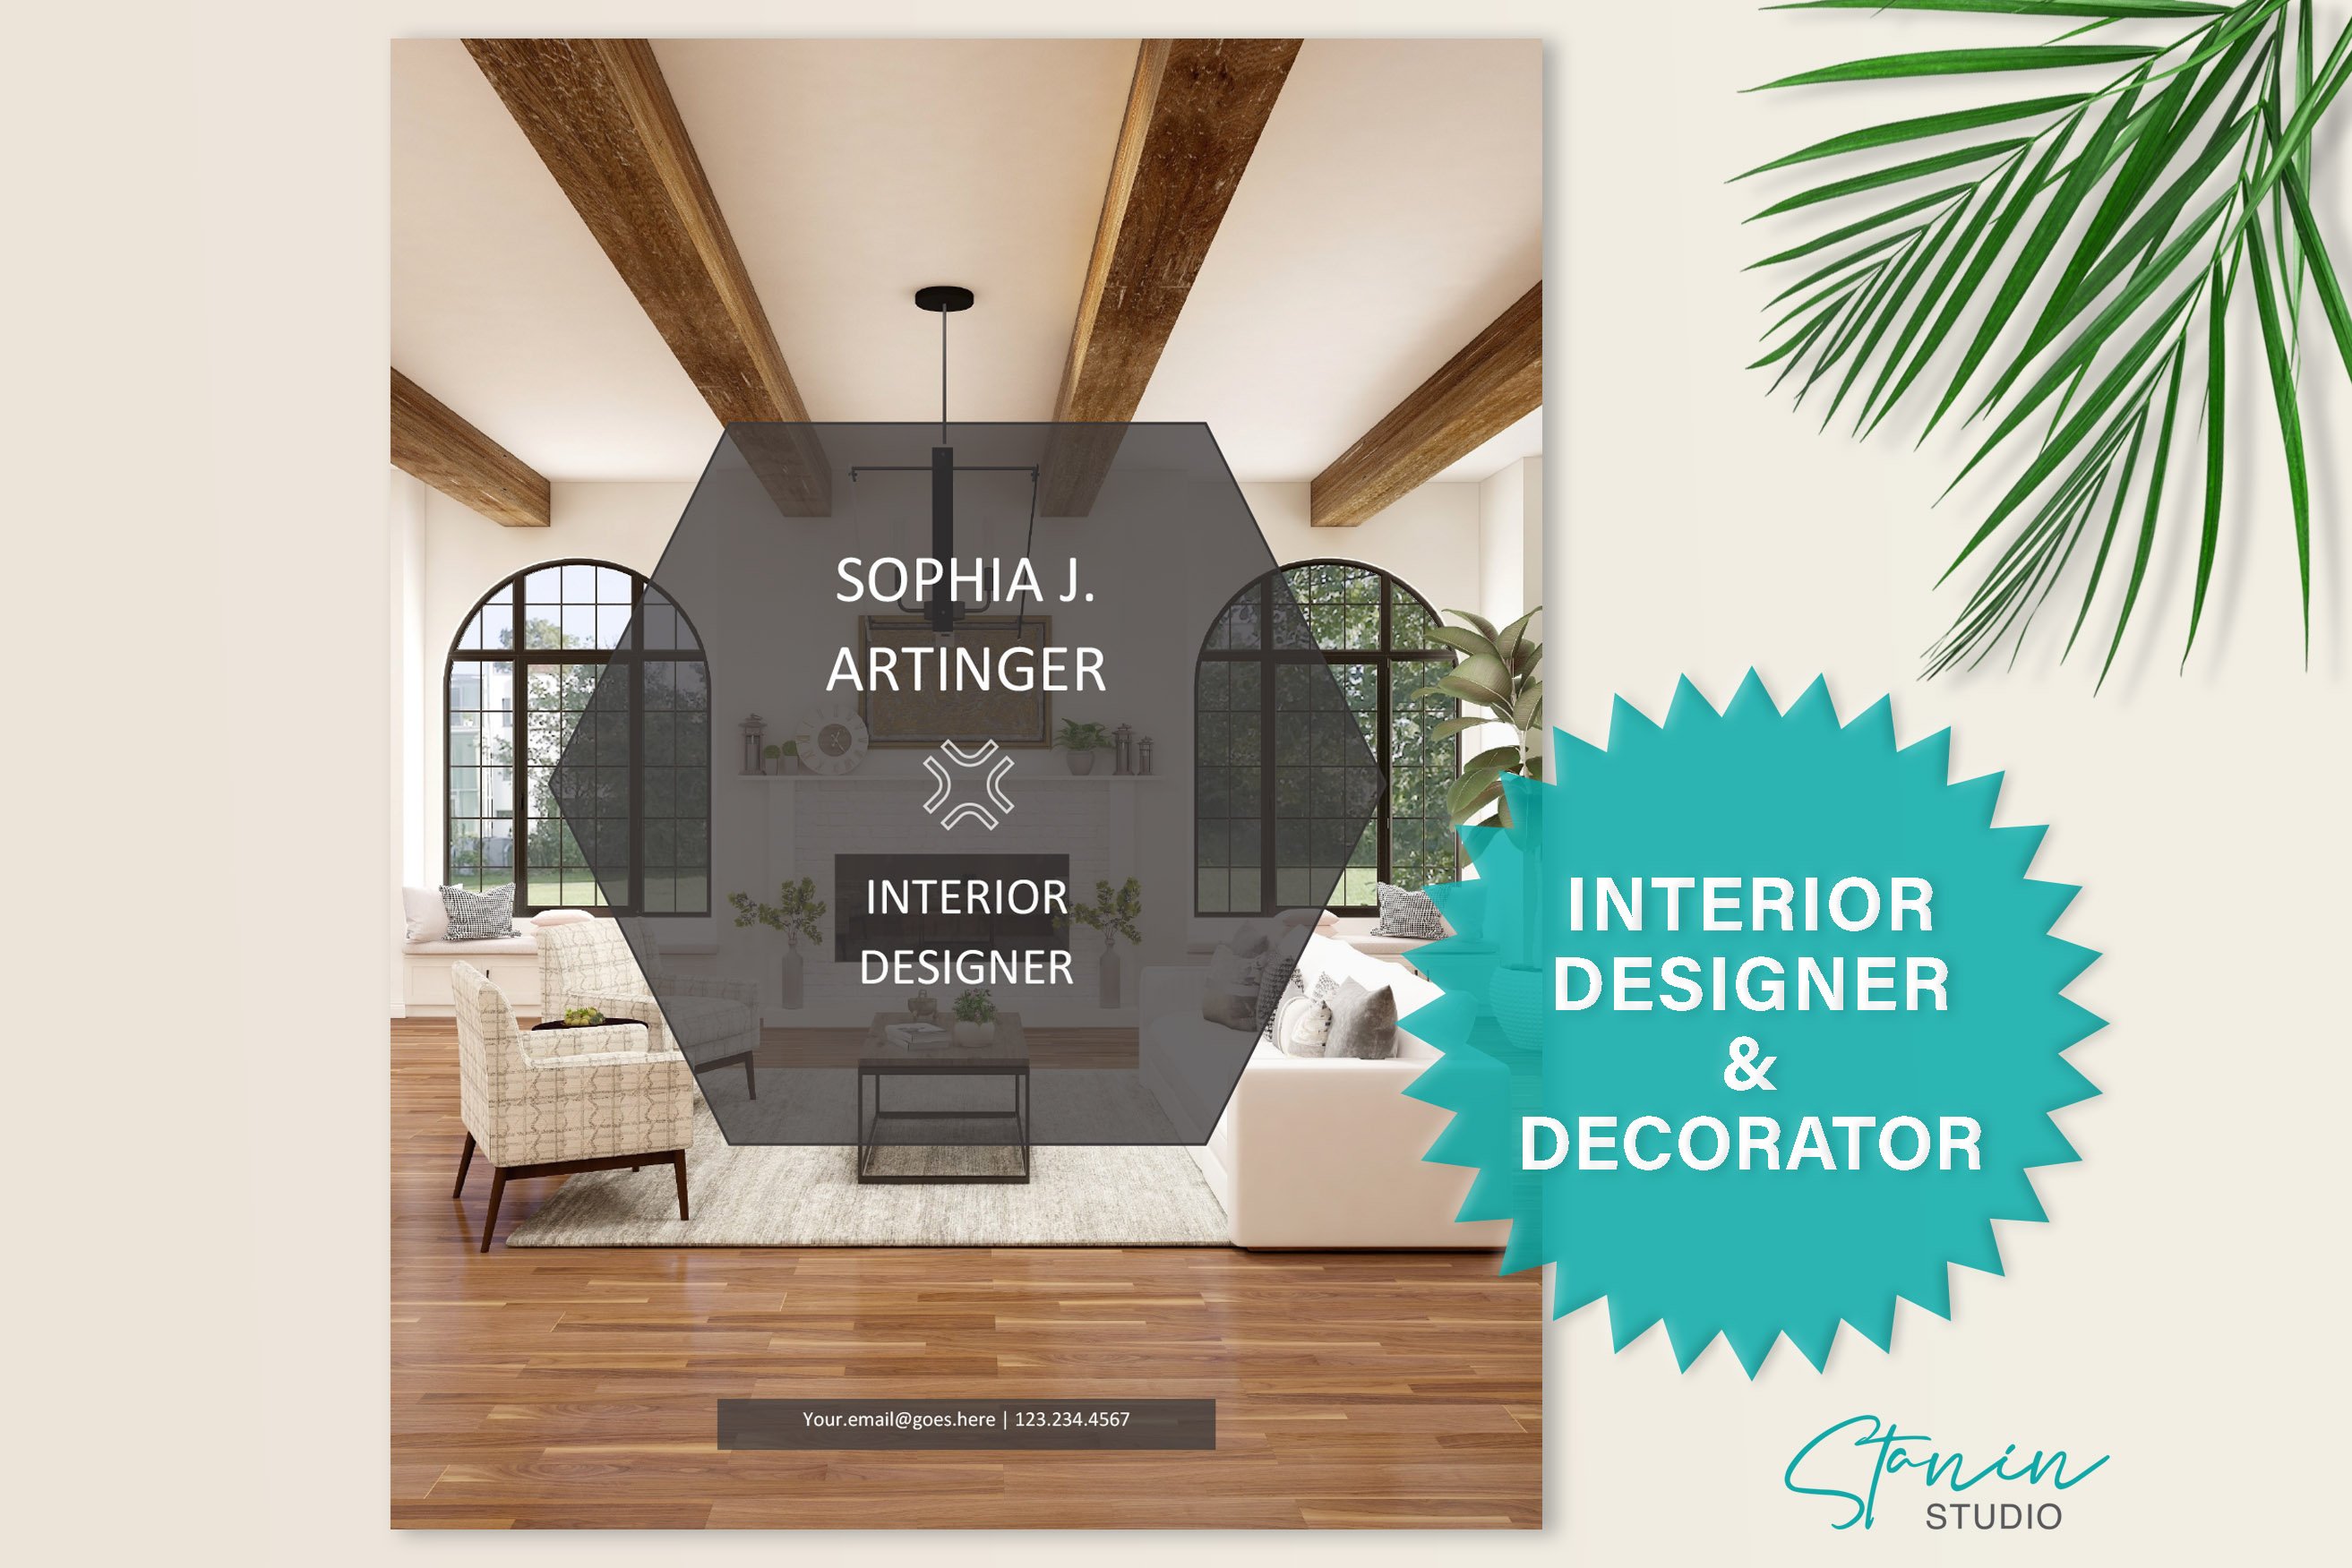 Interior Designer Resume Template cover image.